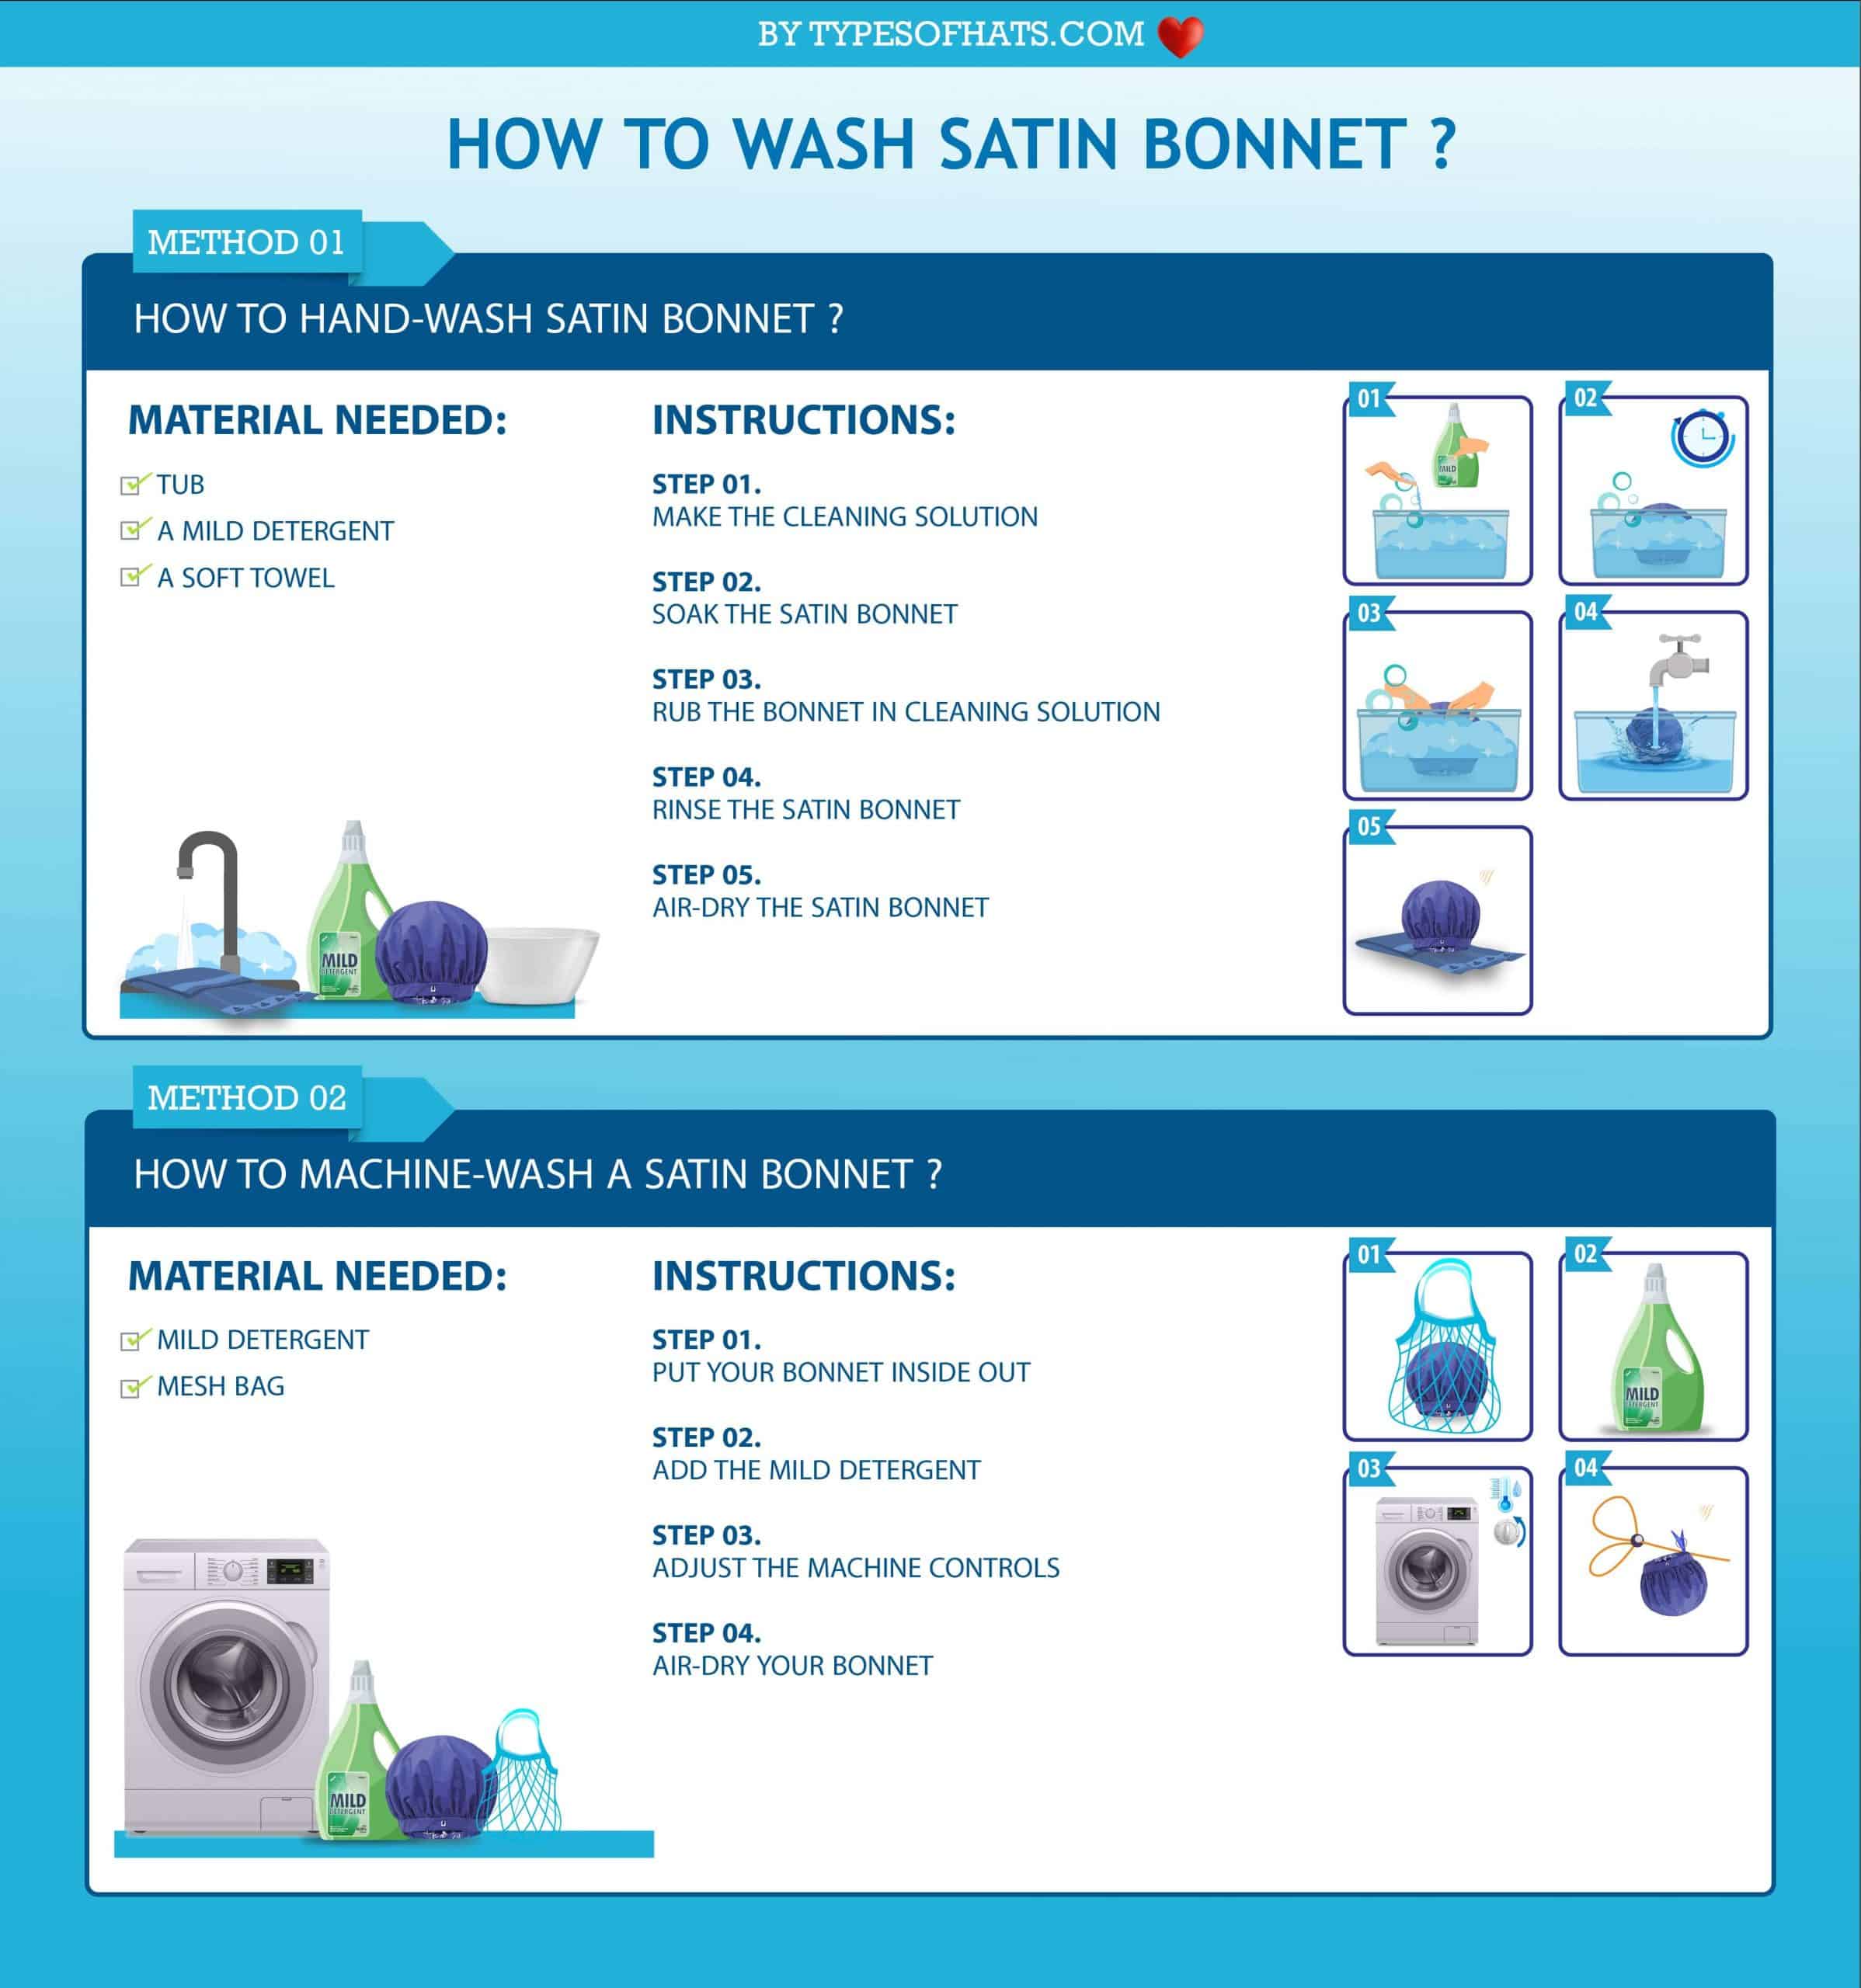 How to Wash Satin Bonnet